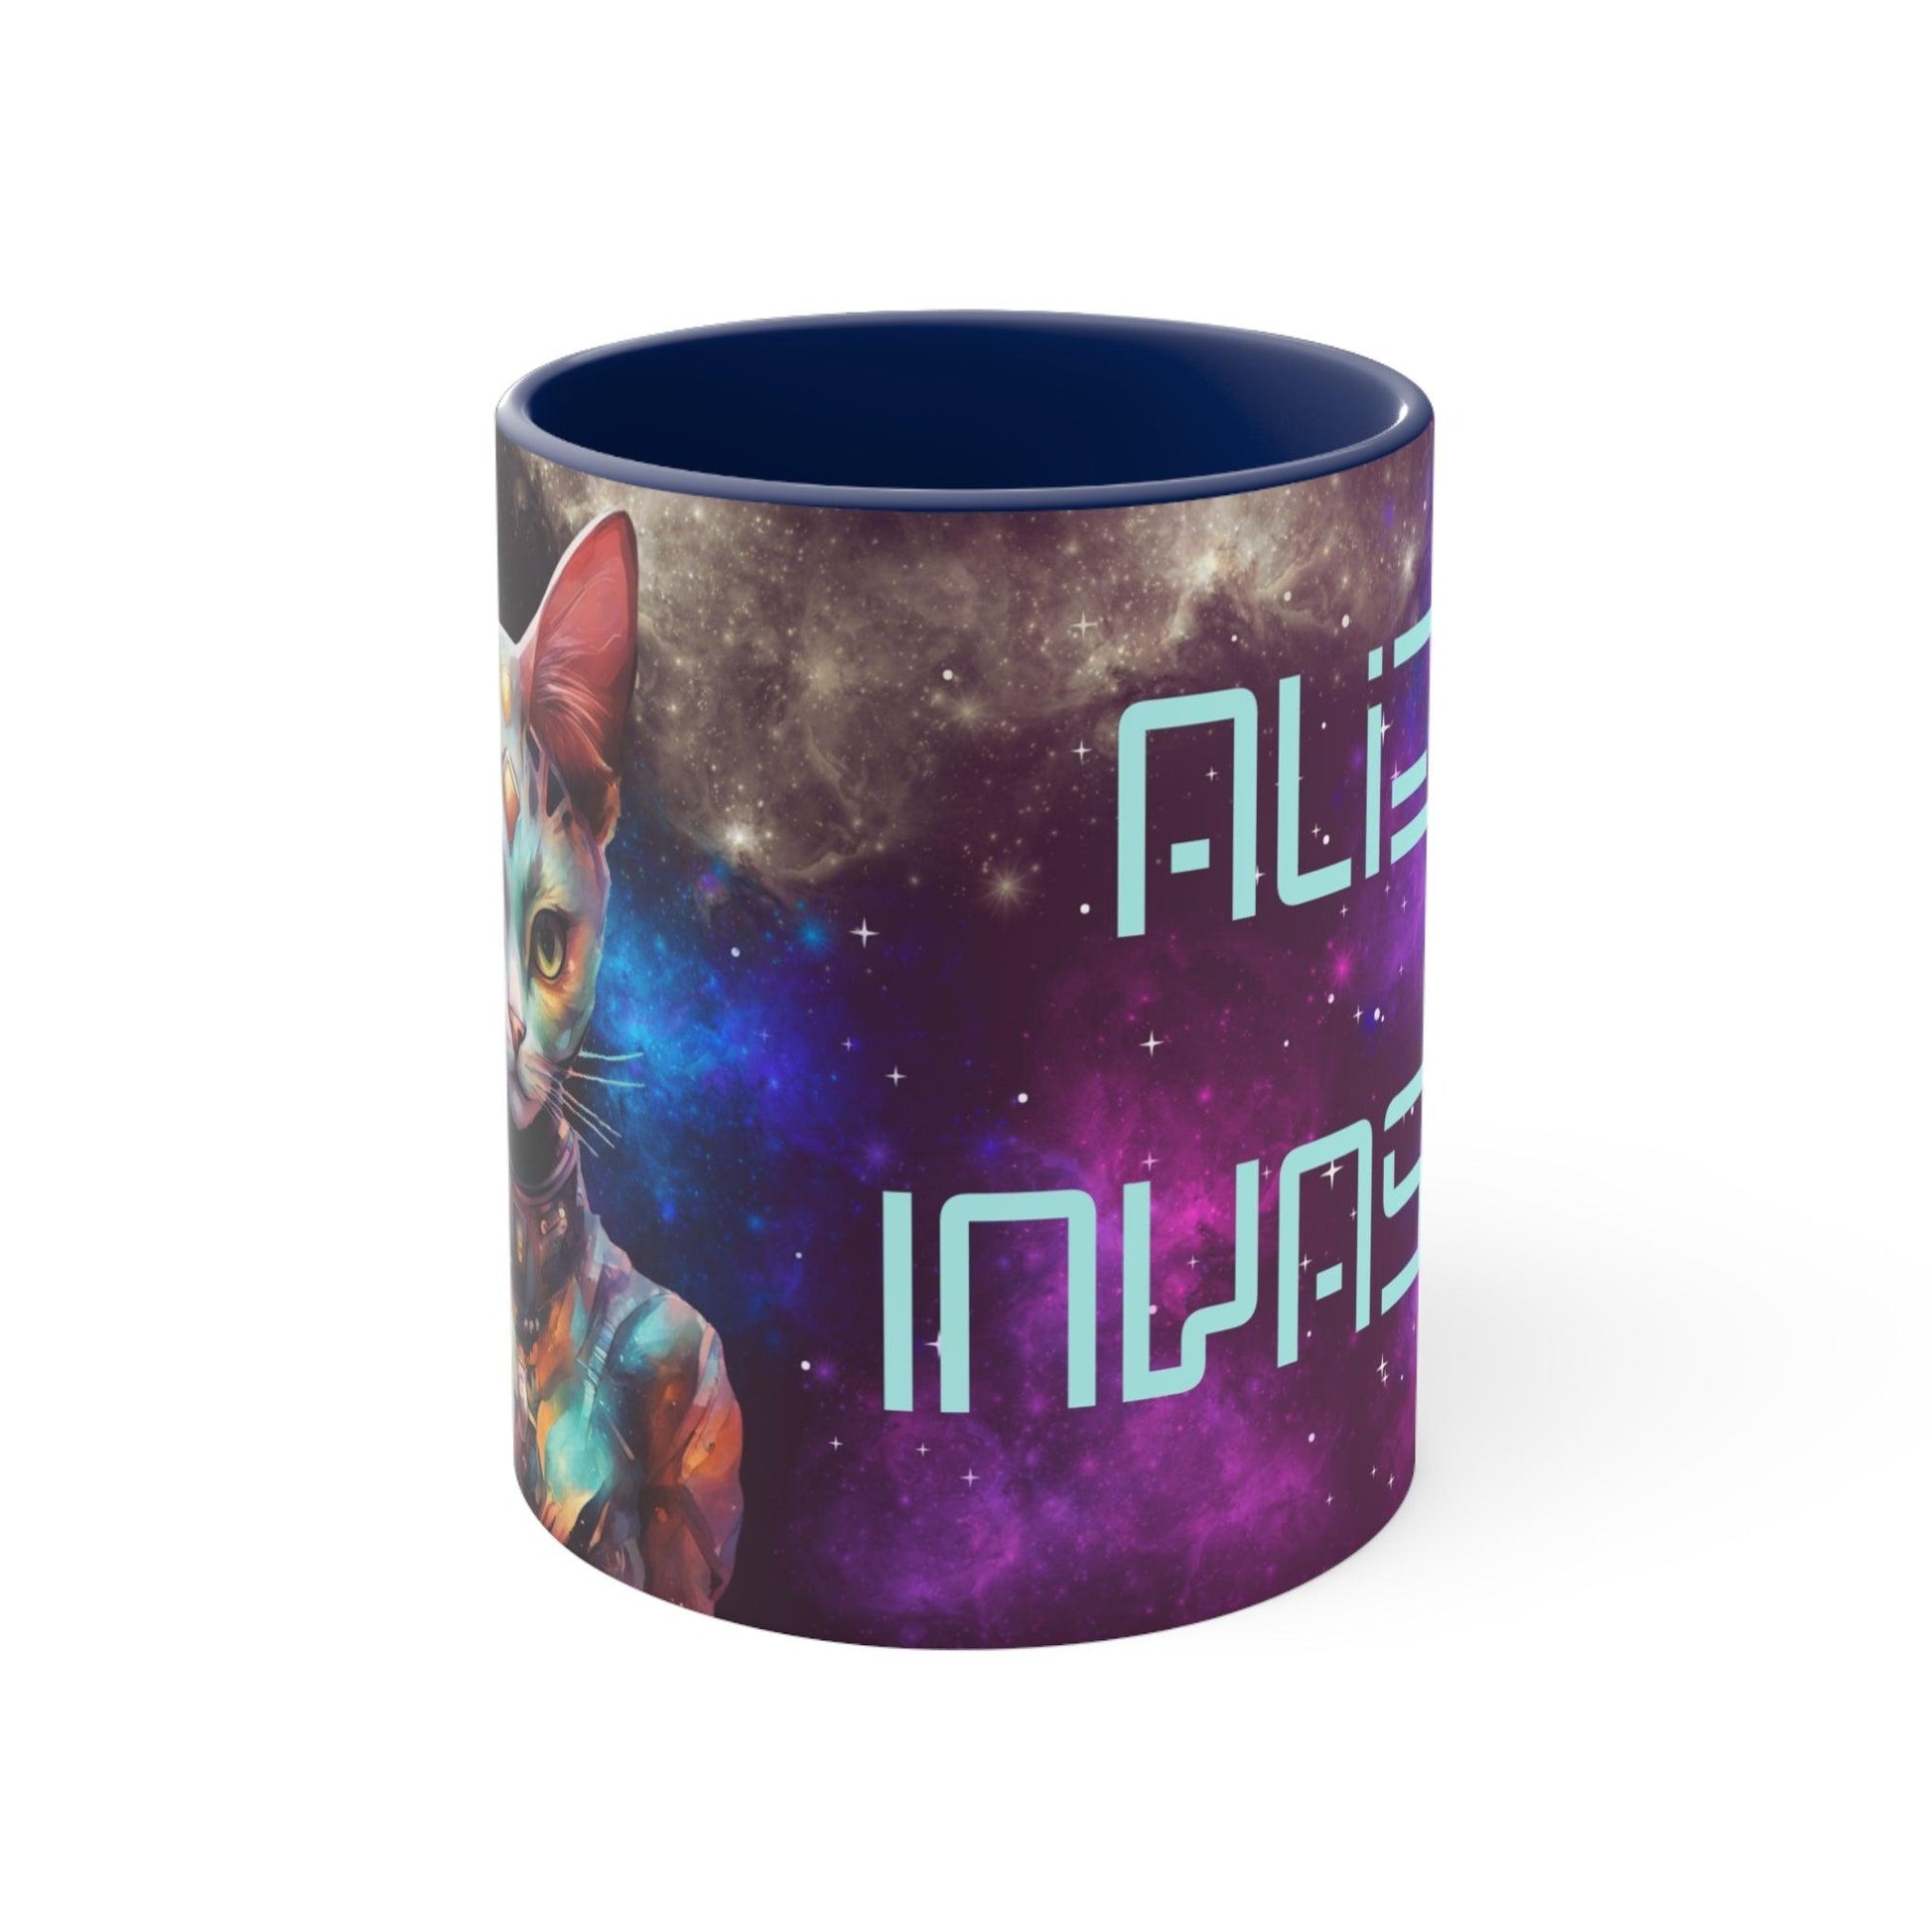 Mug "Alien Invasion" - Alien Cat - Accent Coffee Mug, 11oz - Soulshinecreators